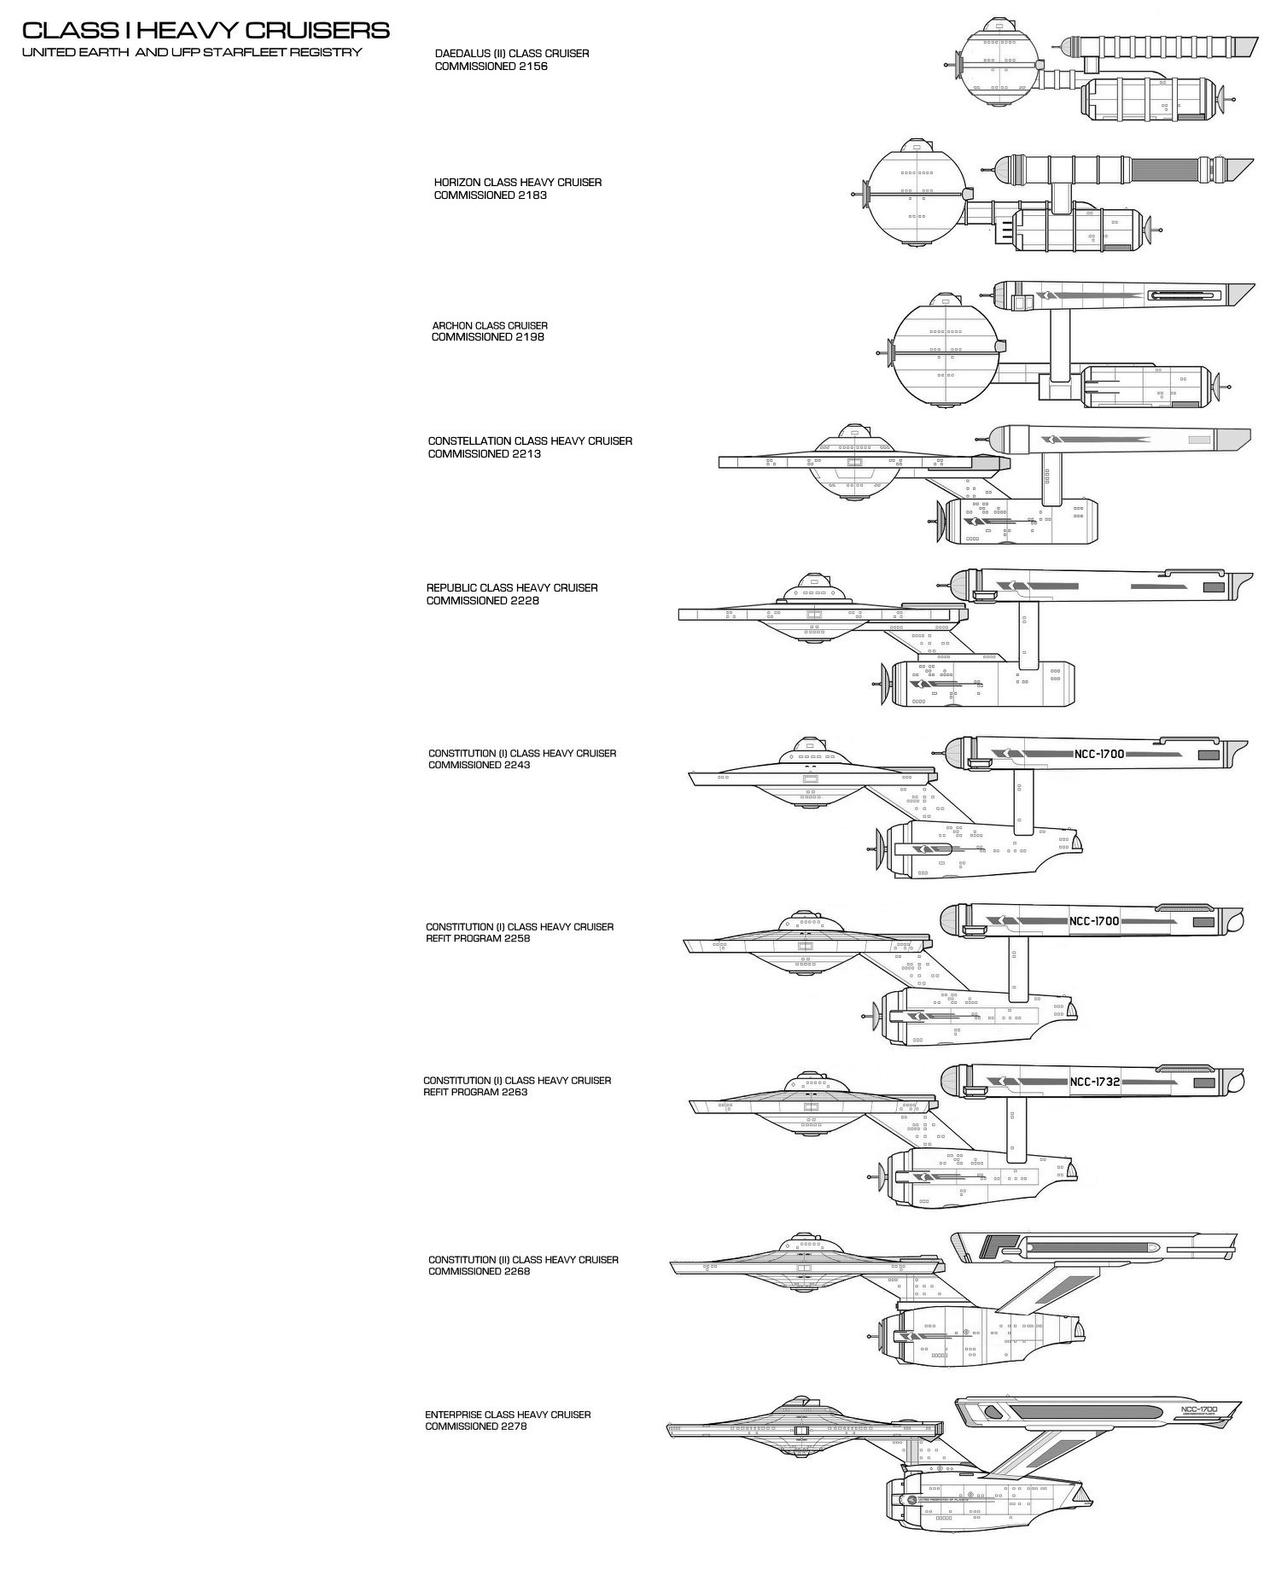 United Earth/UFP Starfleet Heavy Cruiser Chart by JBogguess on DeviantArt